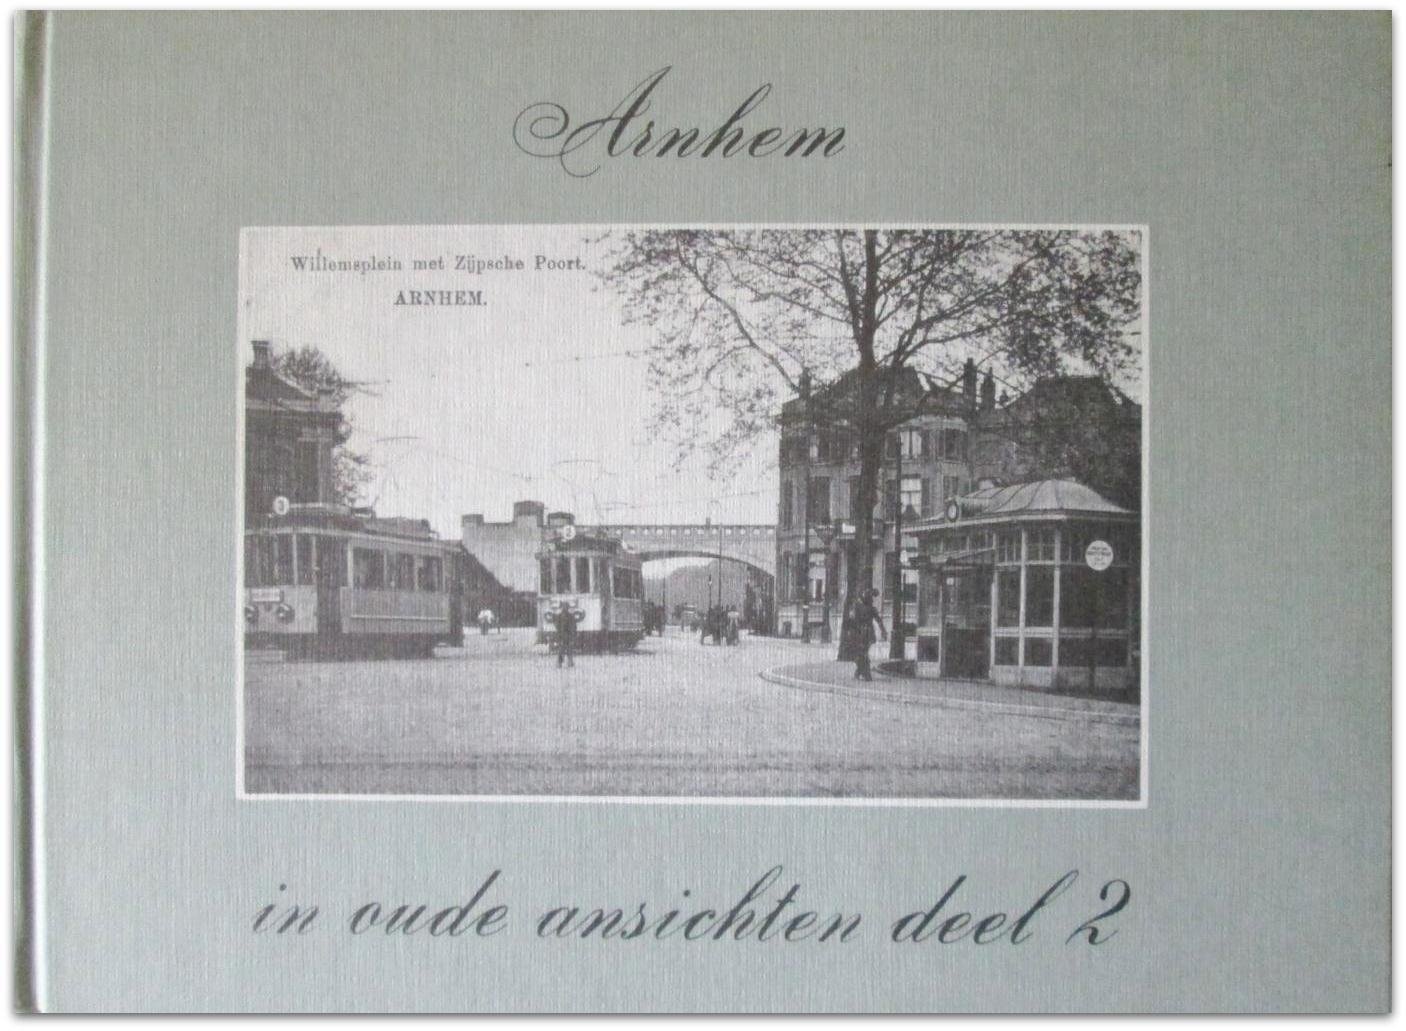 R.S. Dalman - Arnhem in oude ansichten deel 2